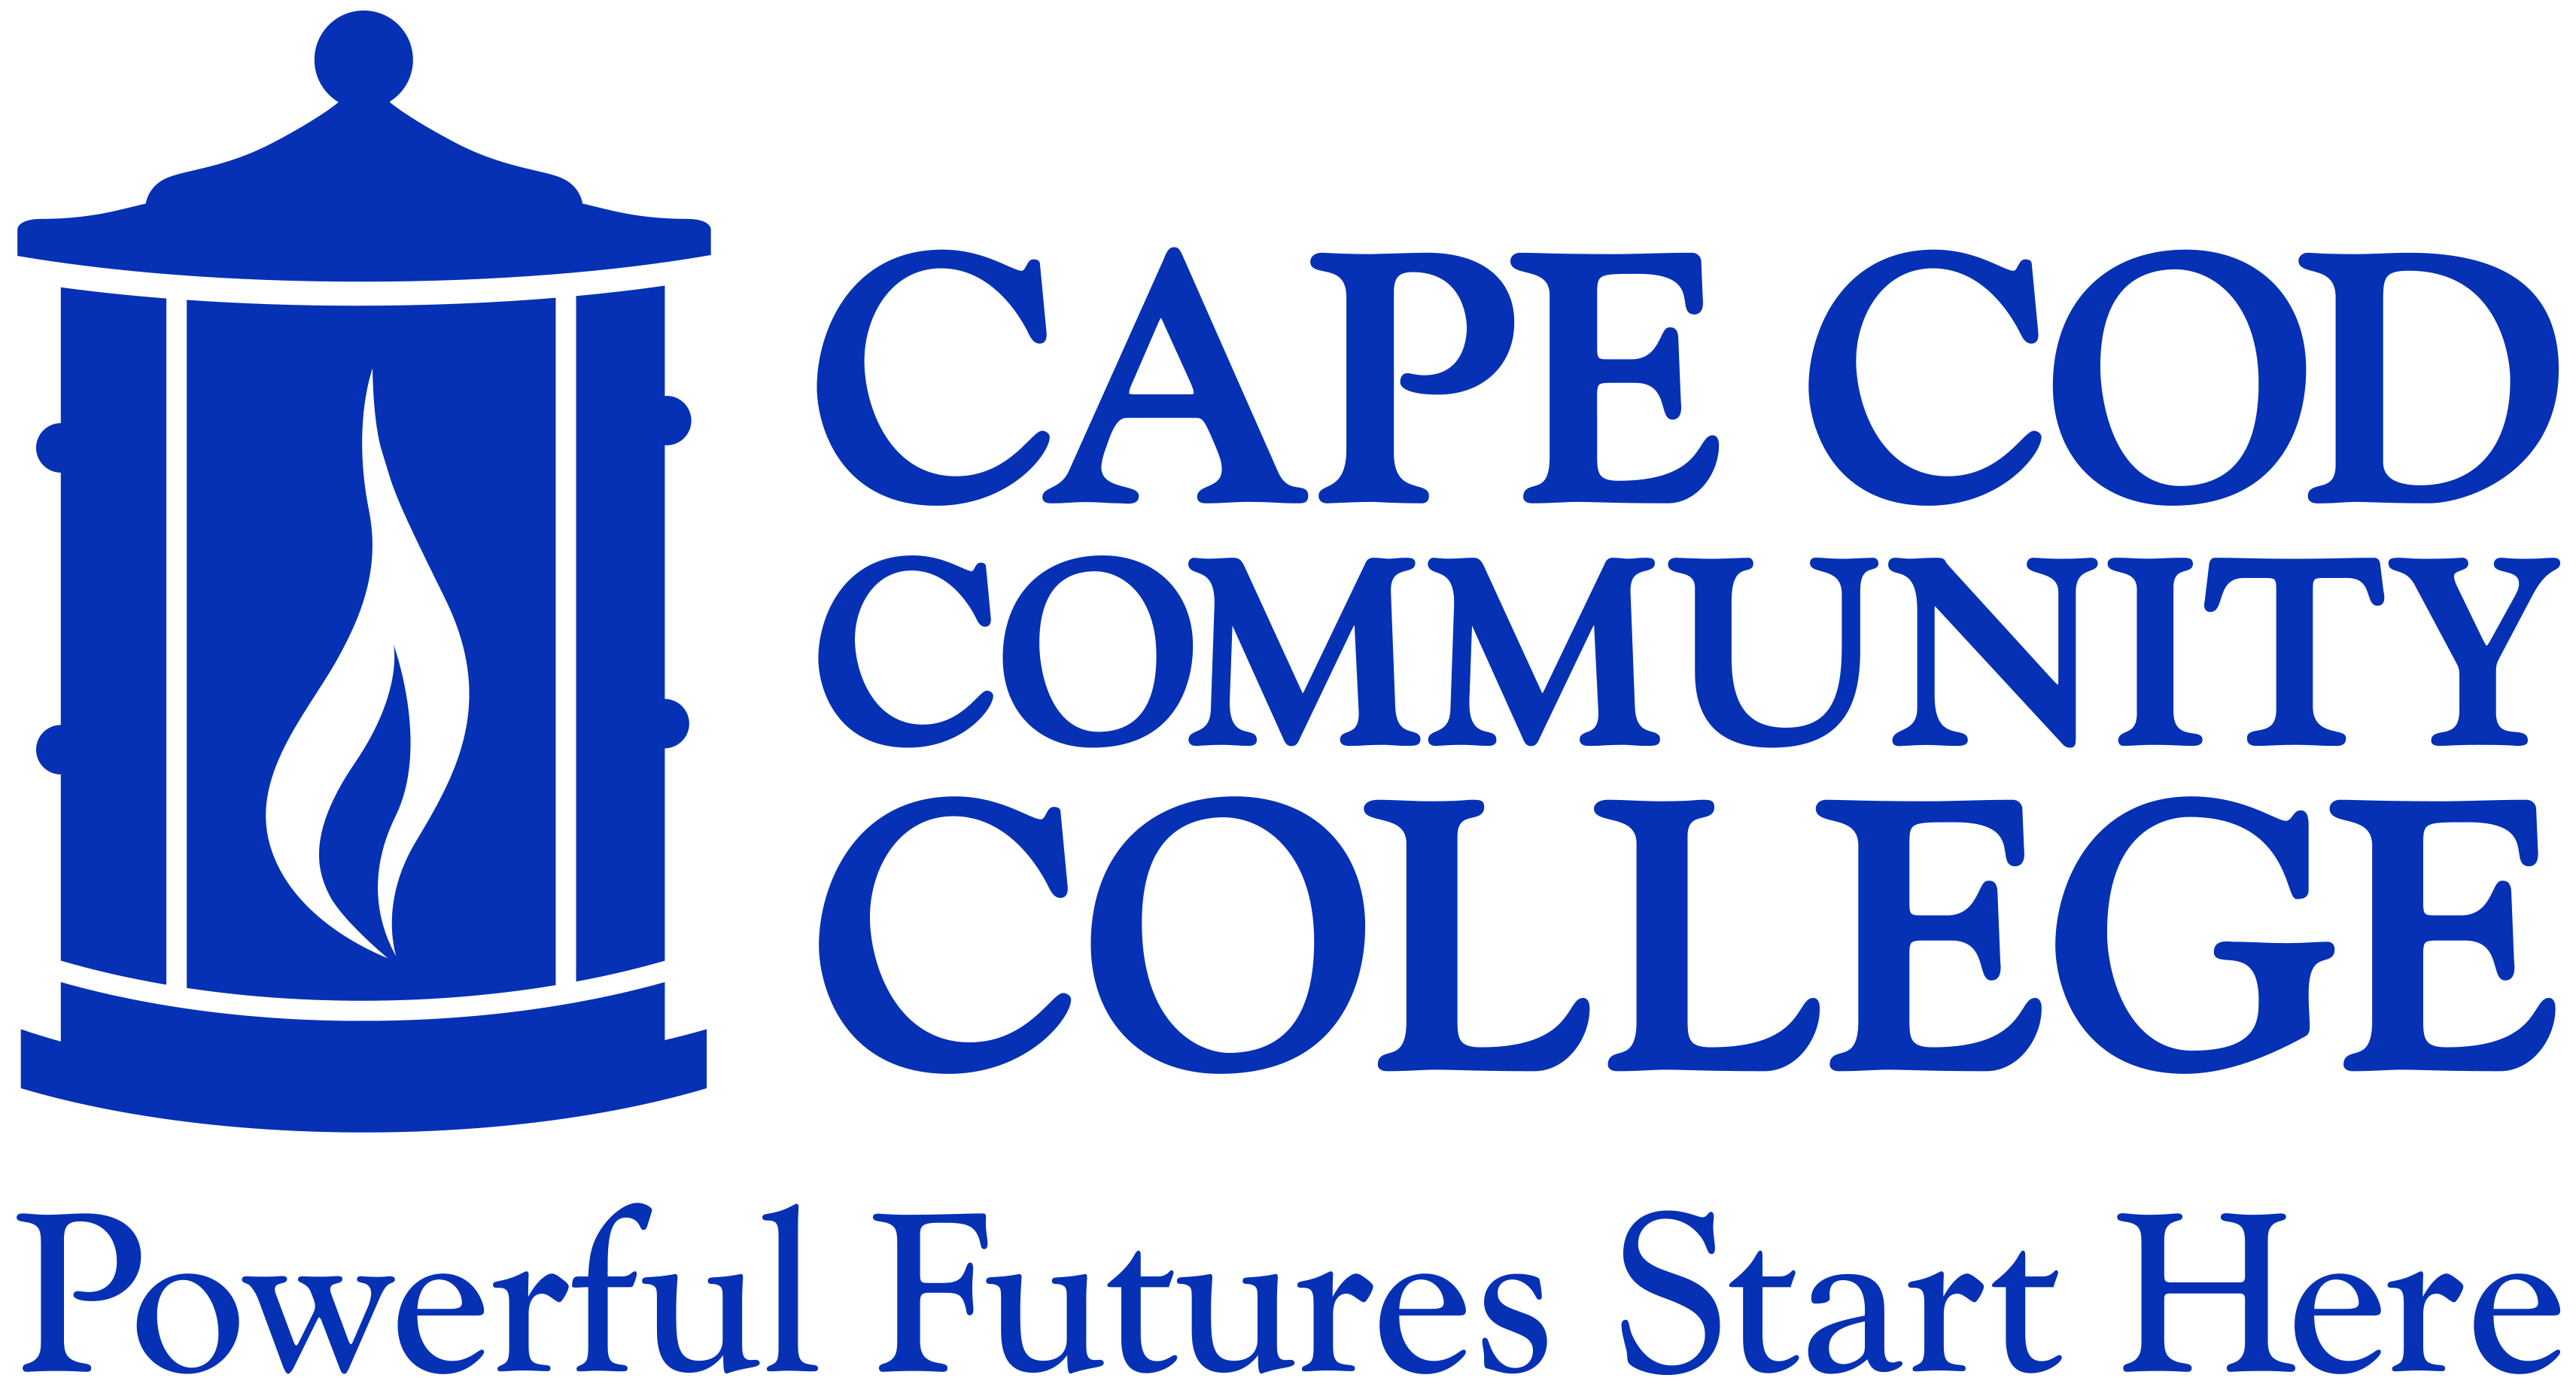 cccc logo blue